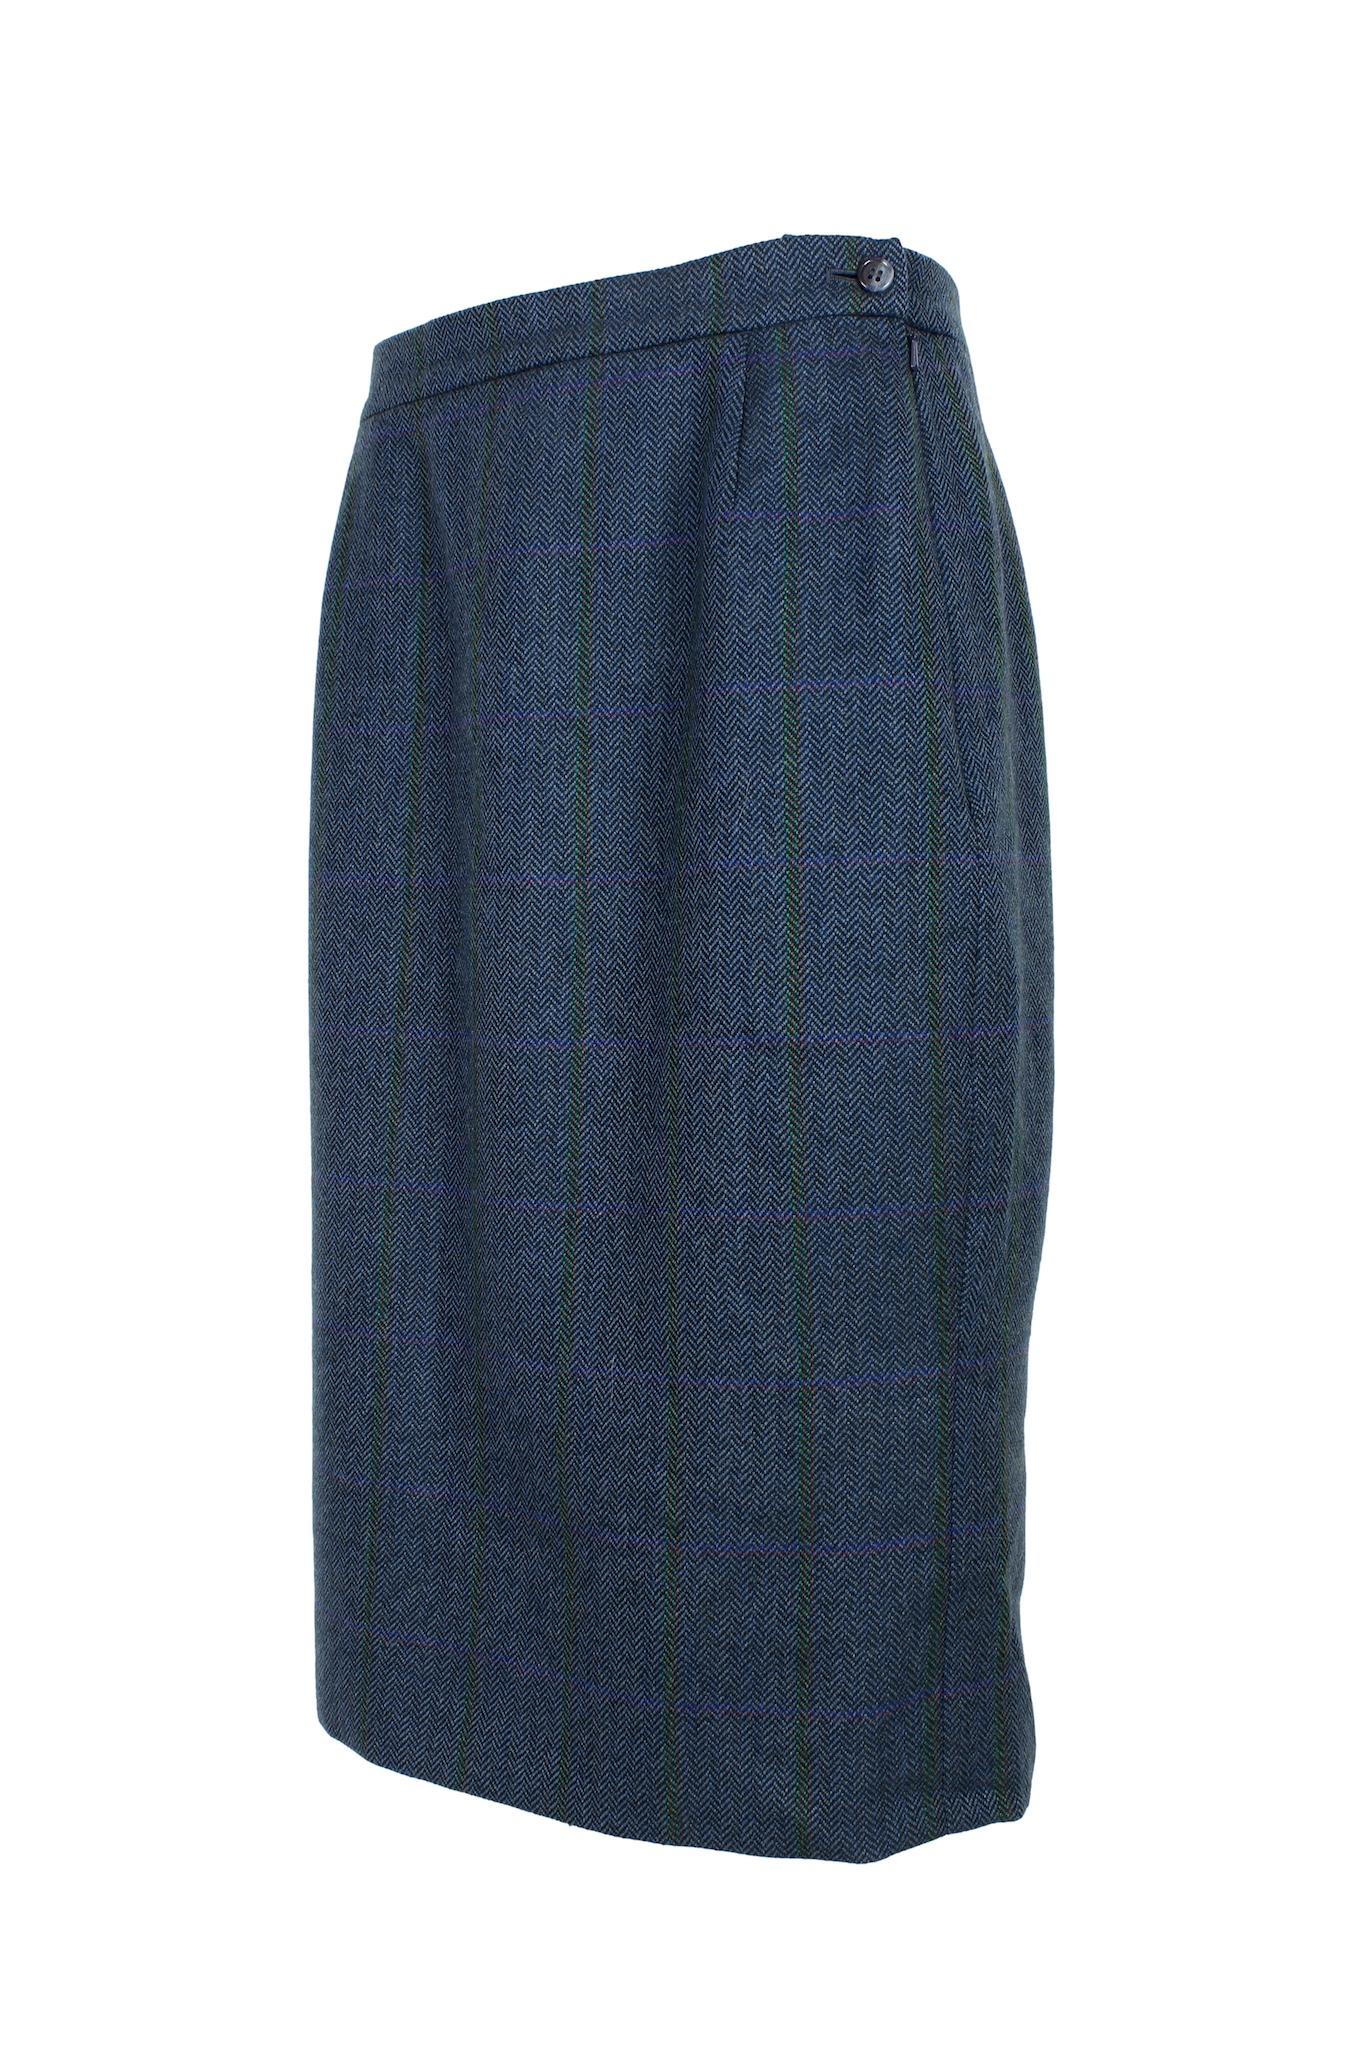 Burberry Blue Wool Herringbone Pencil Skirt 1980 Pour femmes en vente